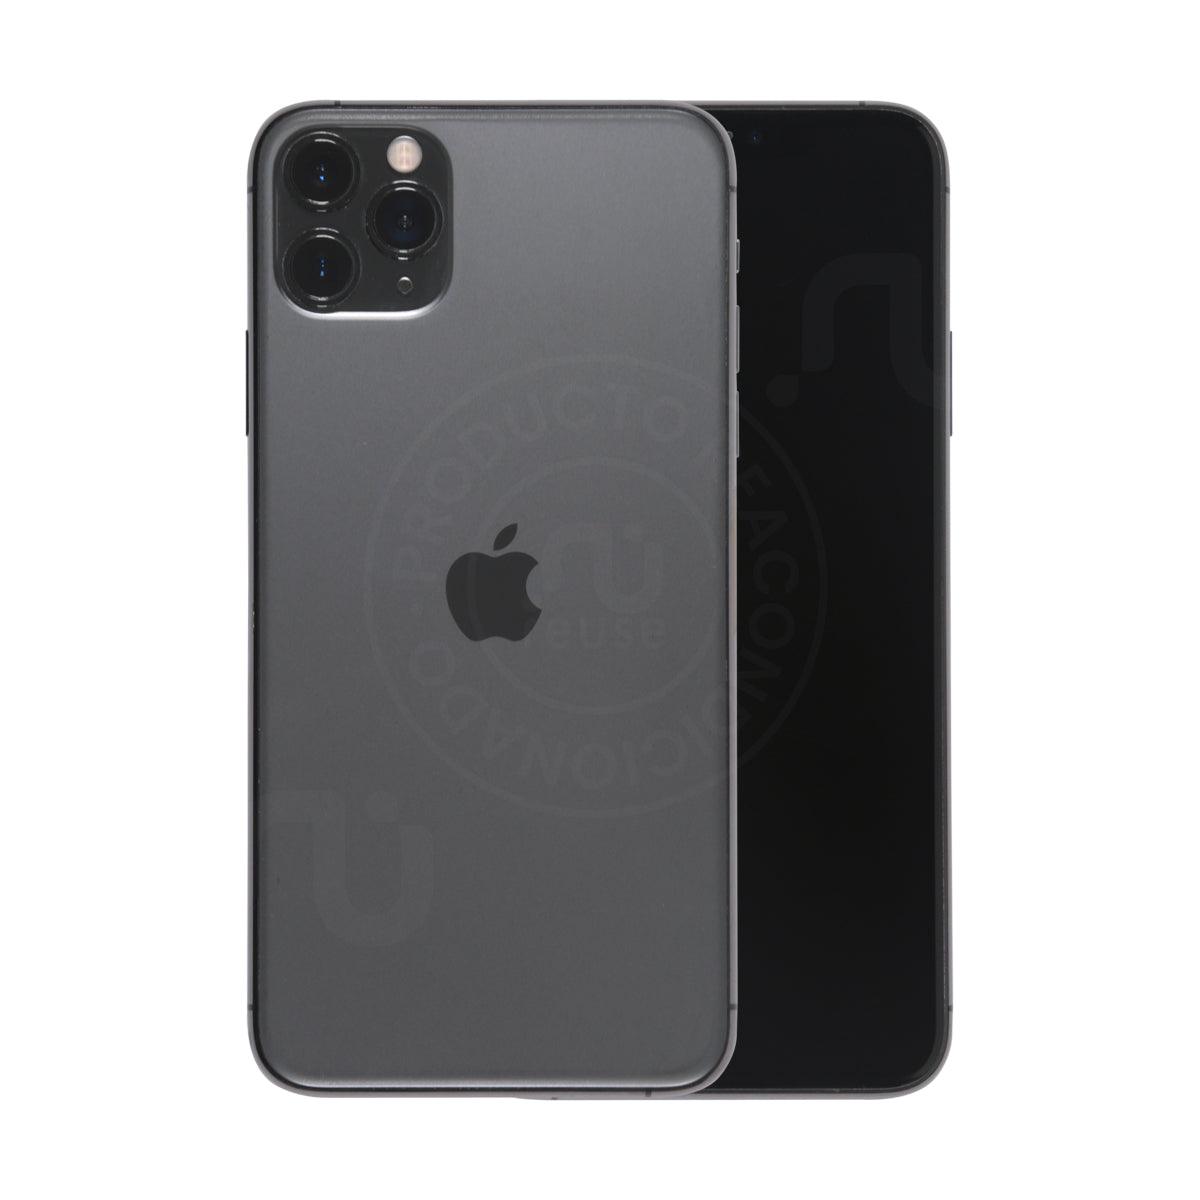 Apple Iphone 11 PRO 64GB Gris Reacondicionado - Reuse Chile